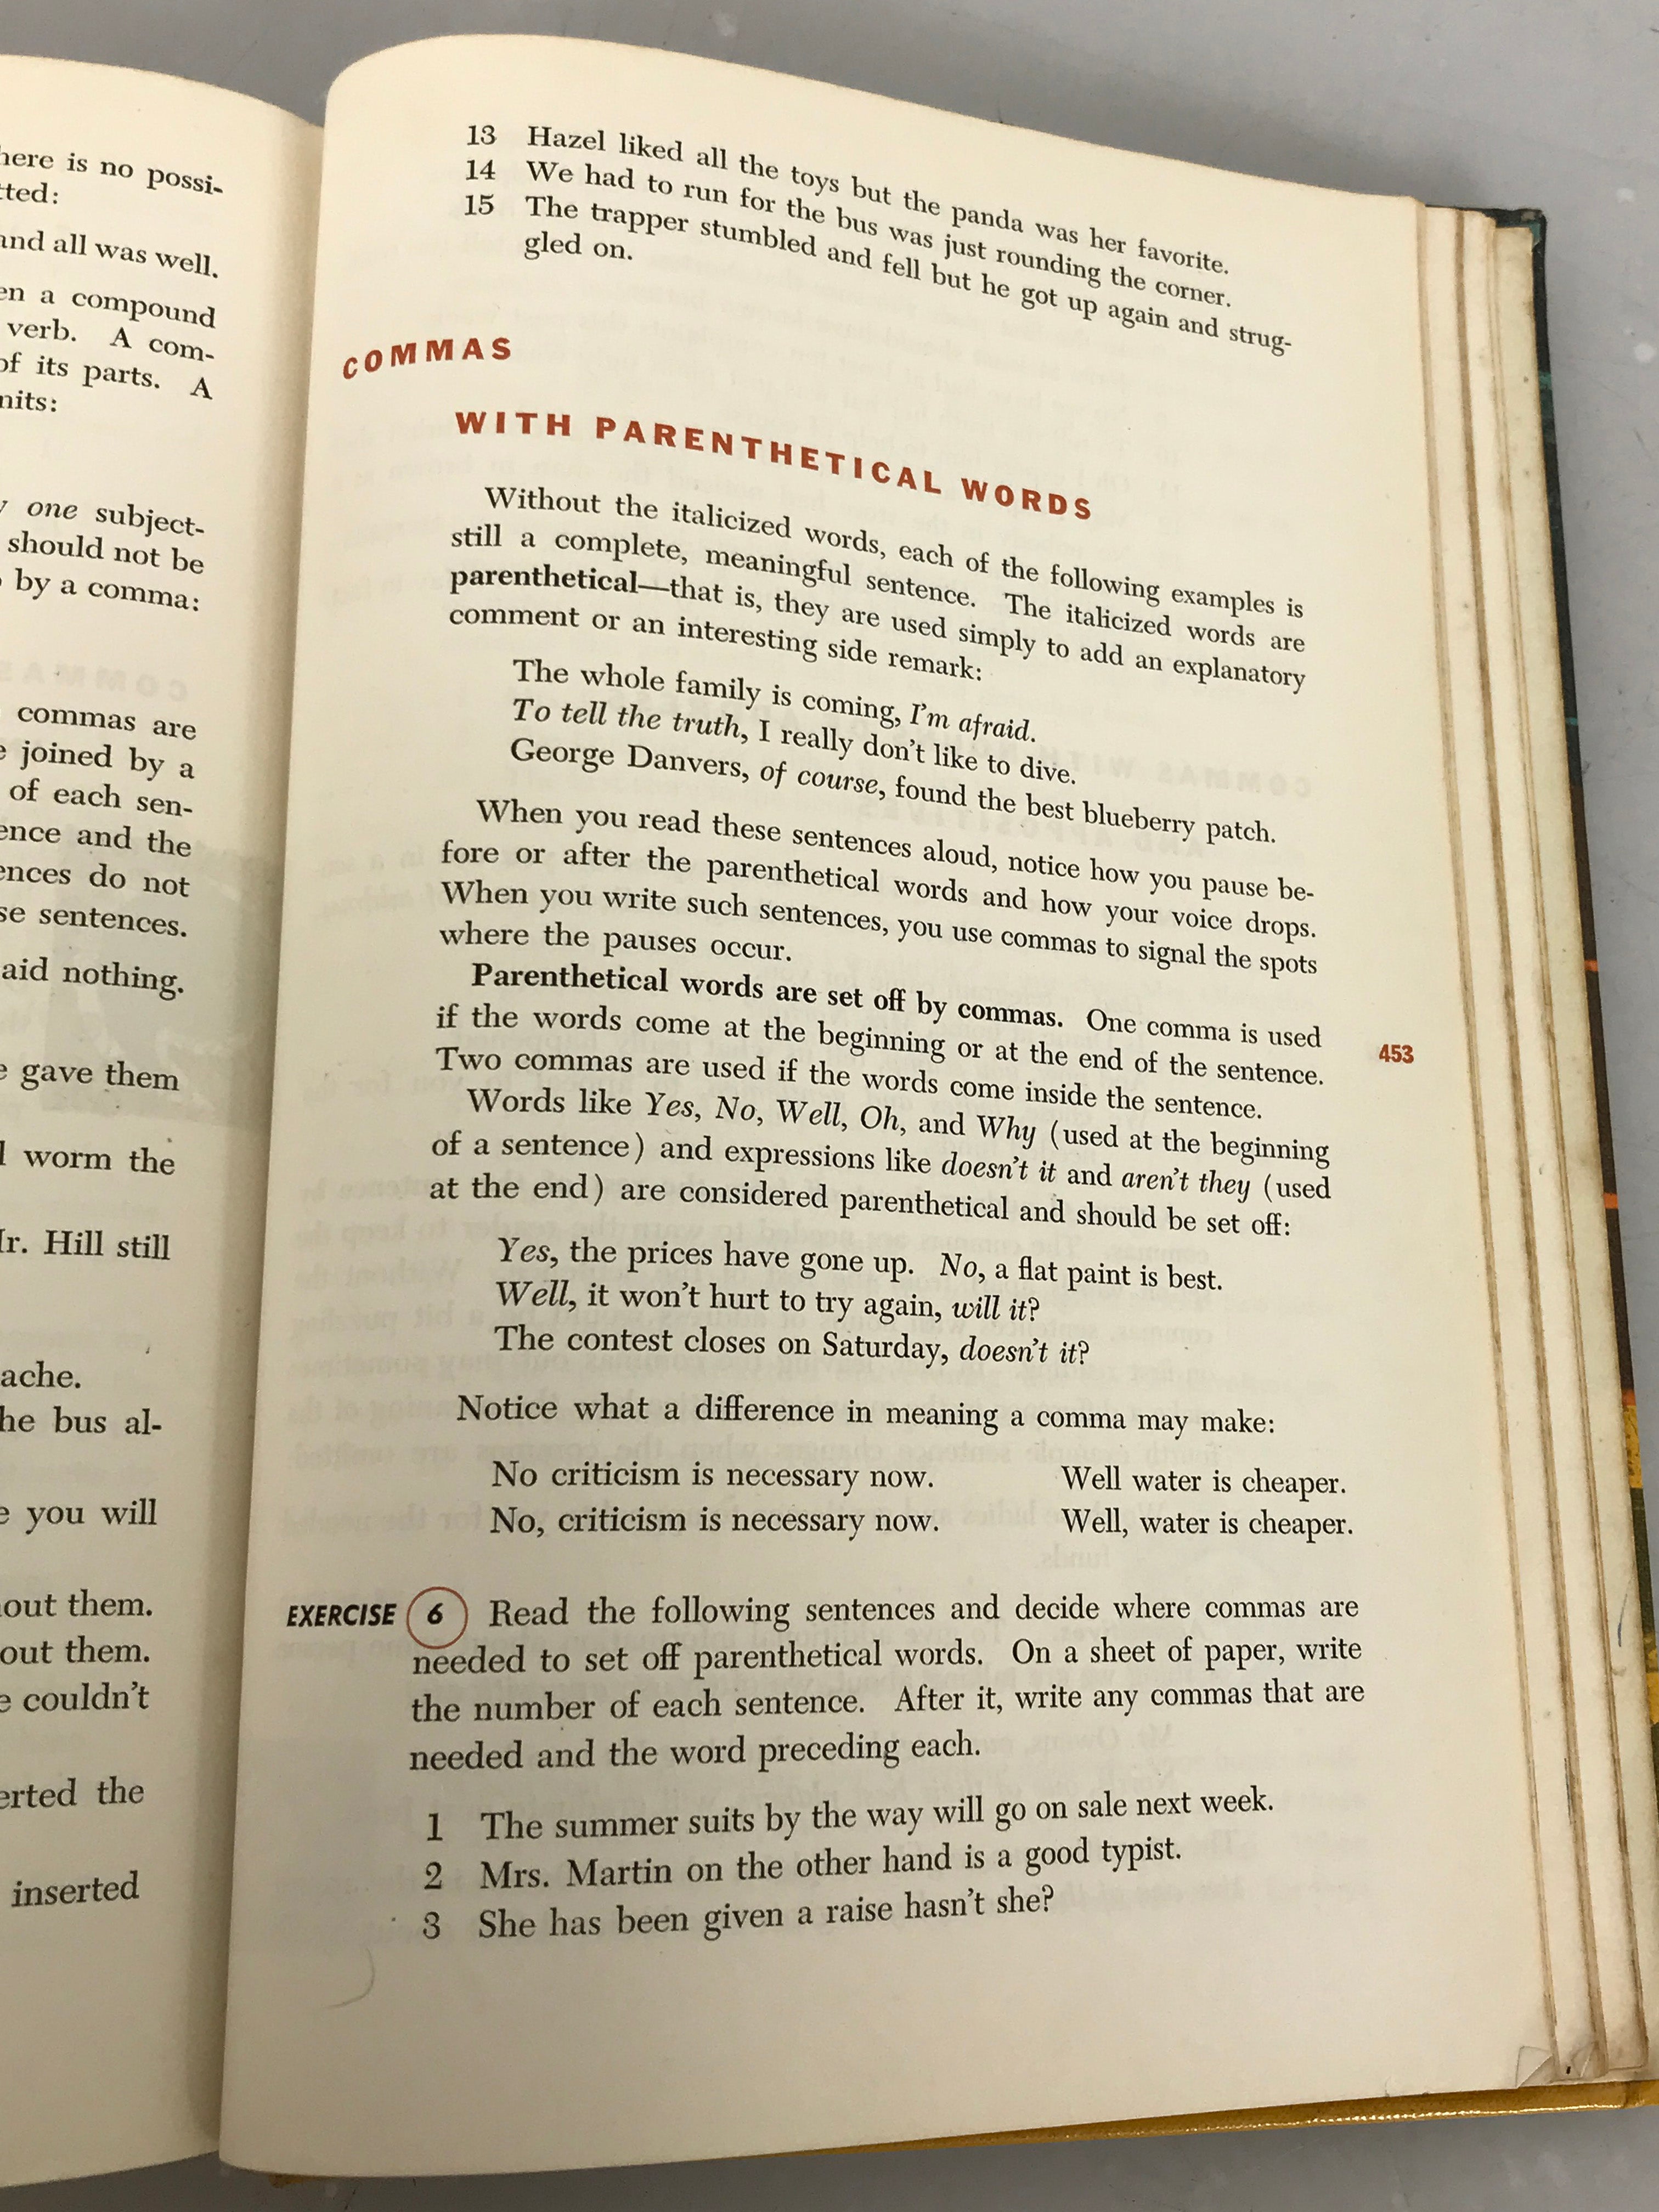 Guide to Modern English Nine 1960 HC